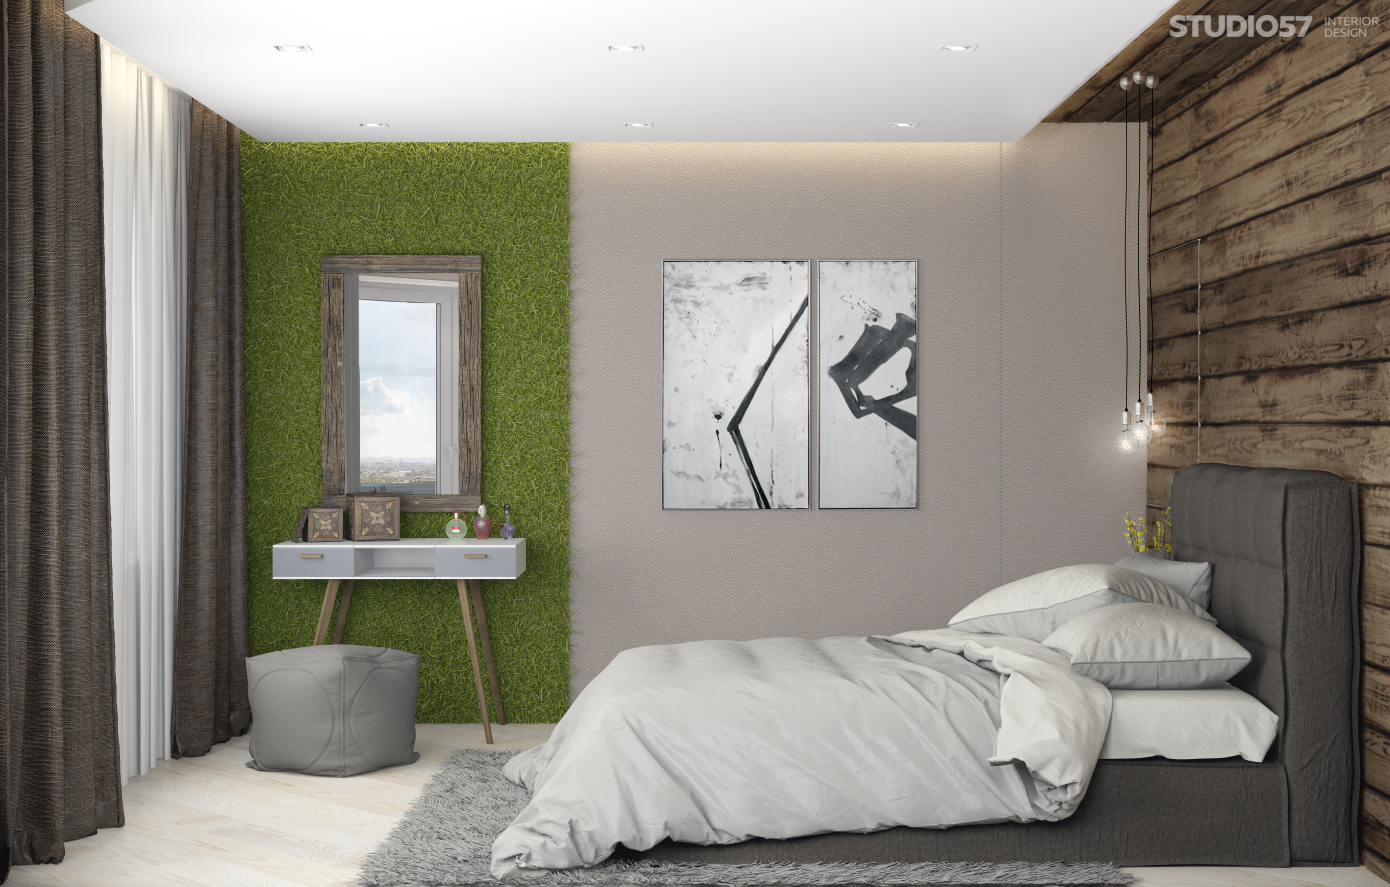 Bedroom interior design in eco style photo